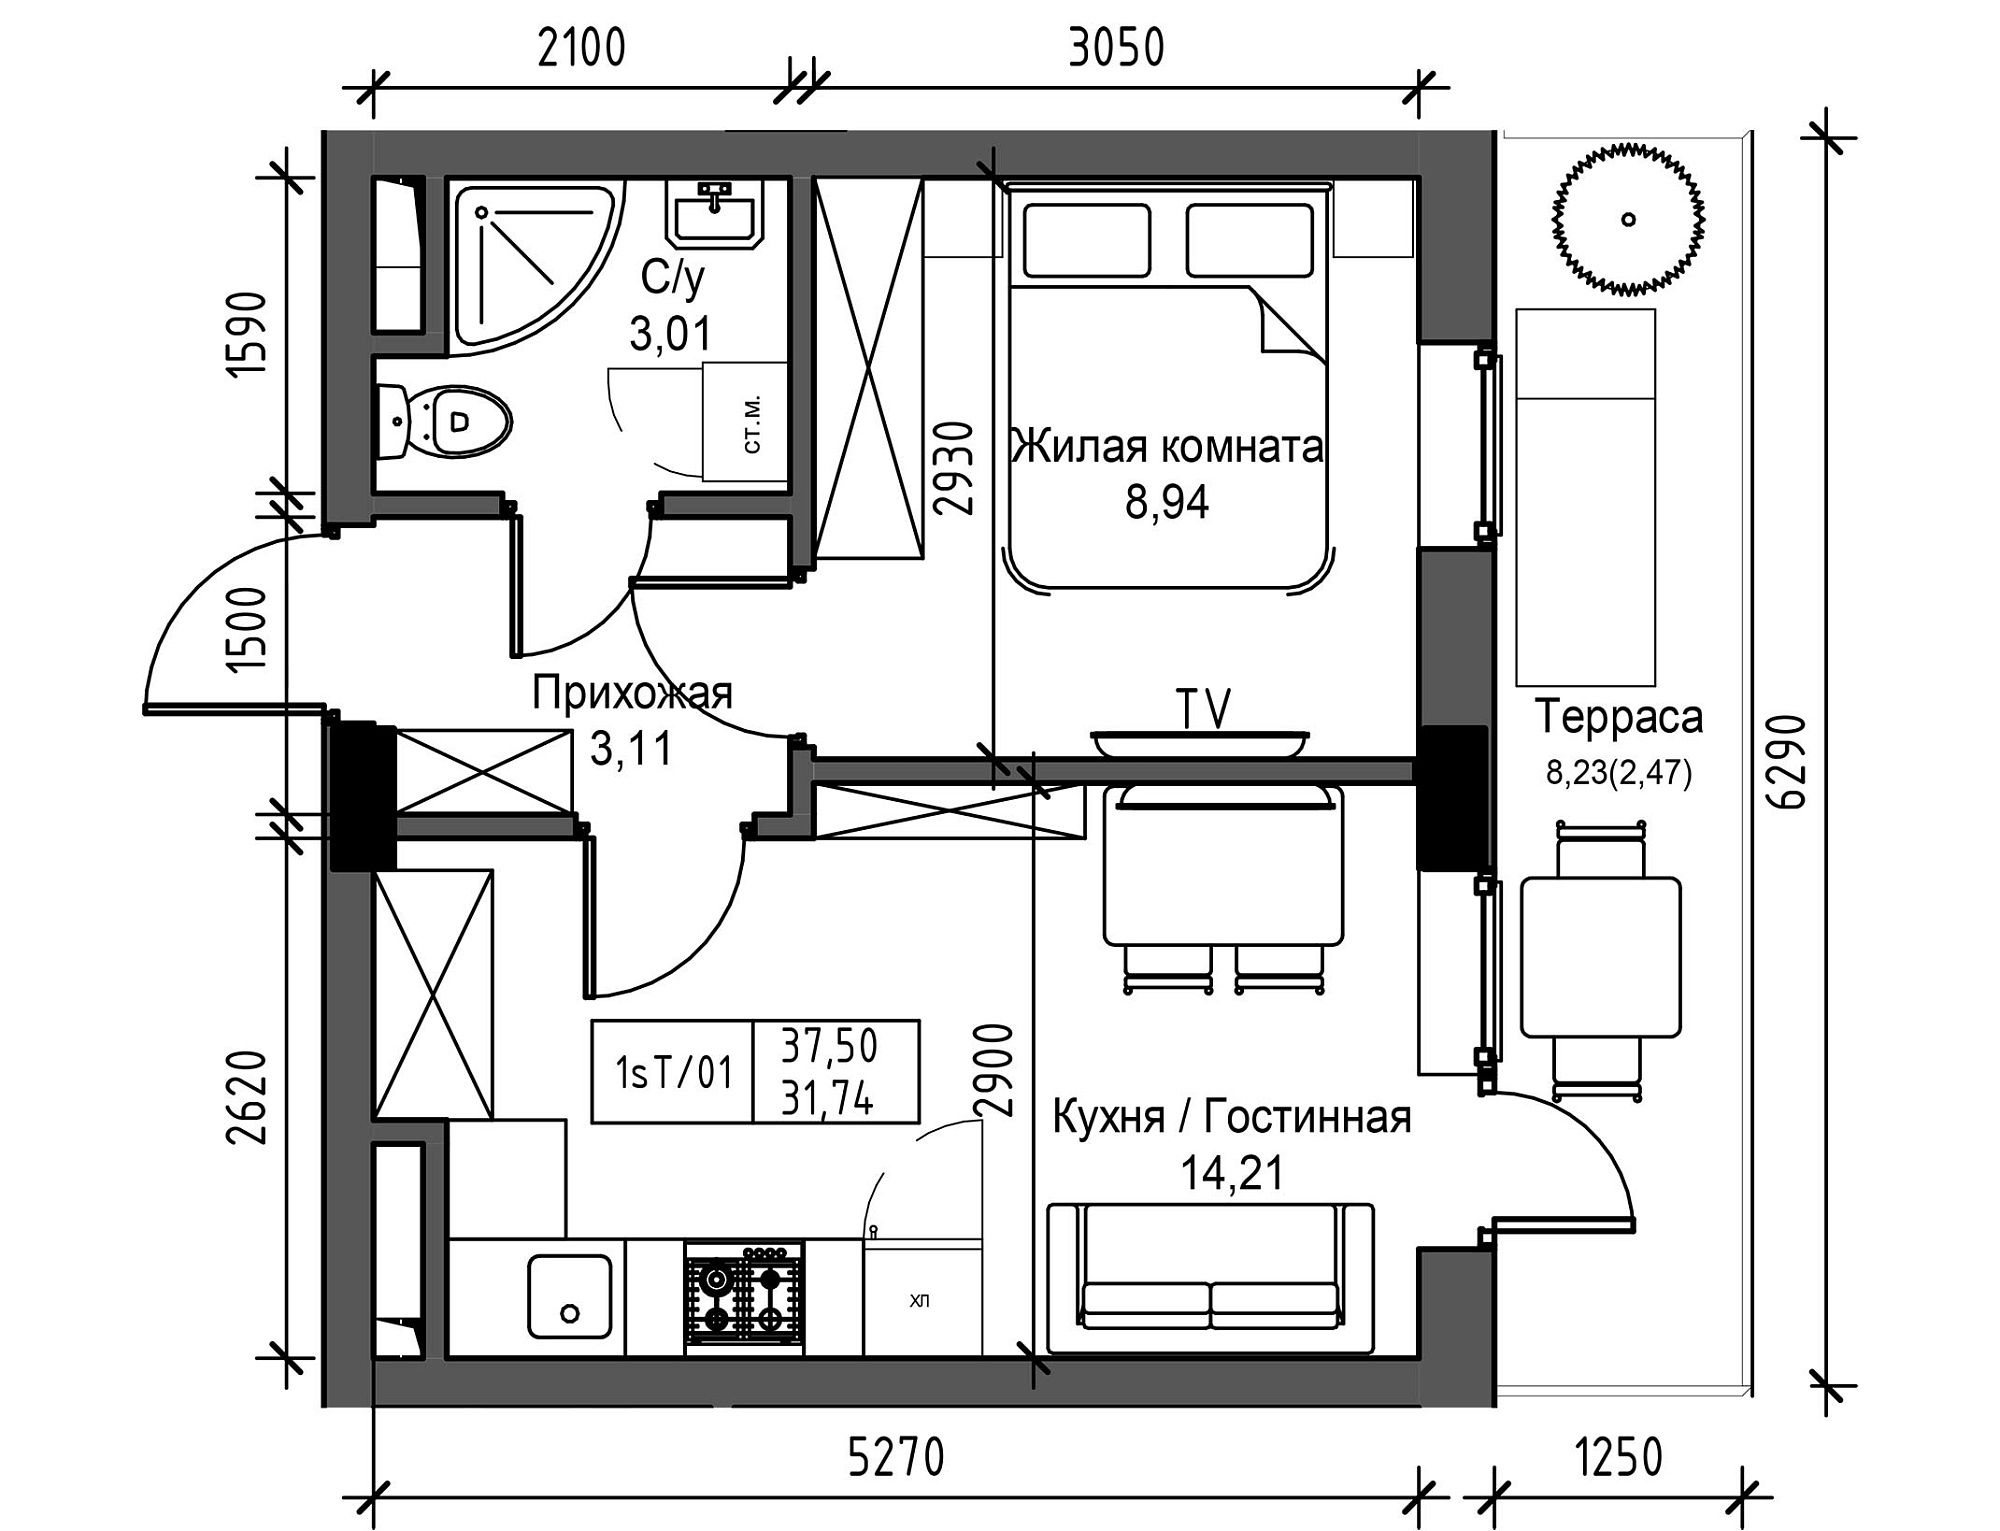 Планування 1-к квартира площею 31.74м2, UM-003-06/0055.